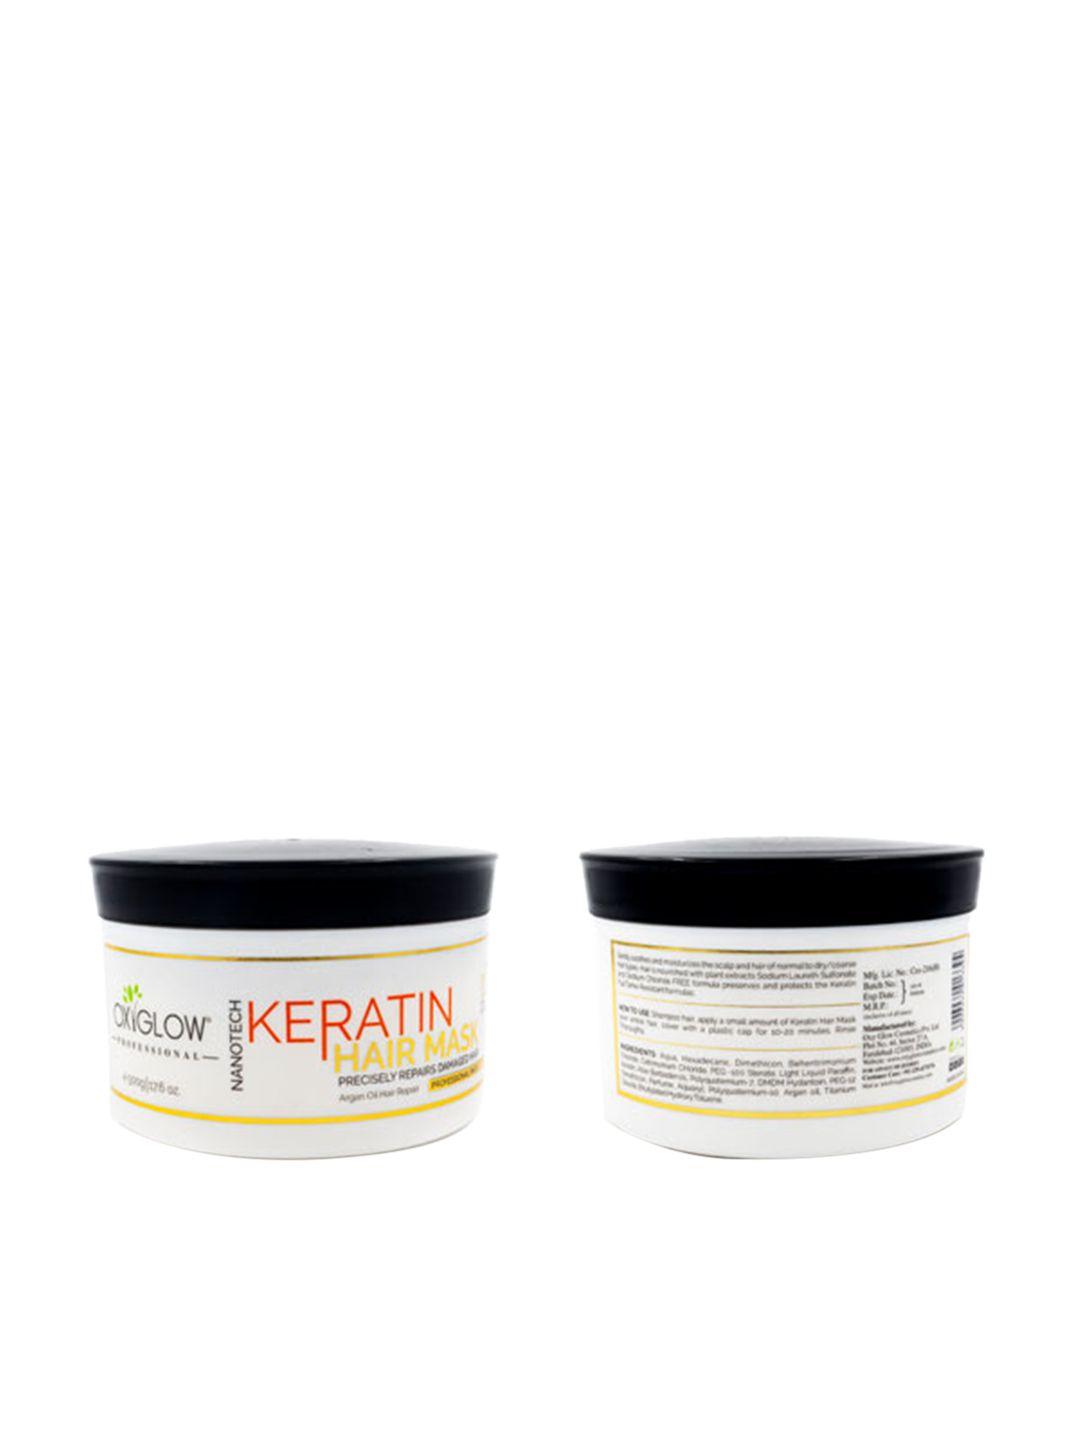 oxyglow keratin hair mask with argan oil - 500g